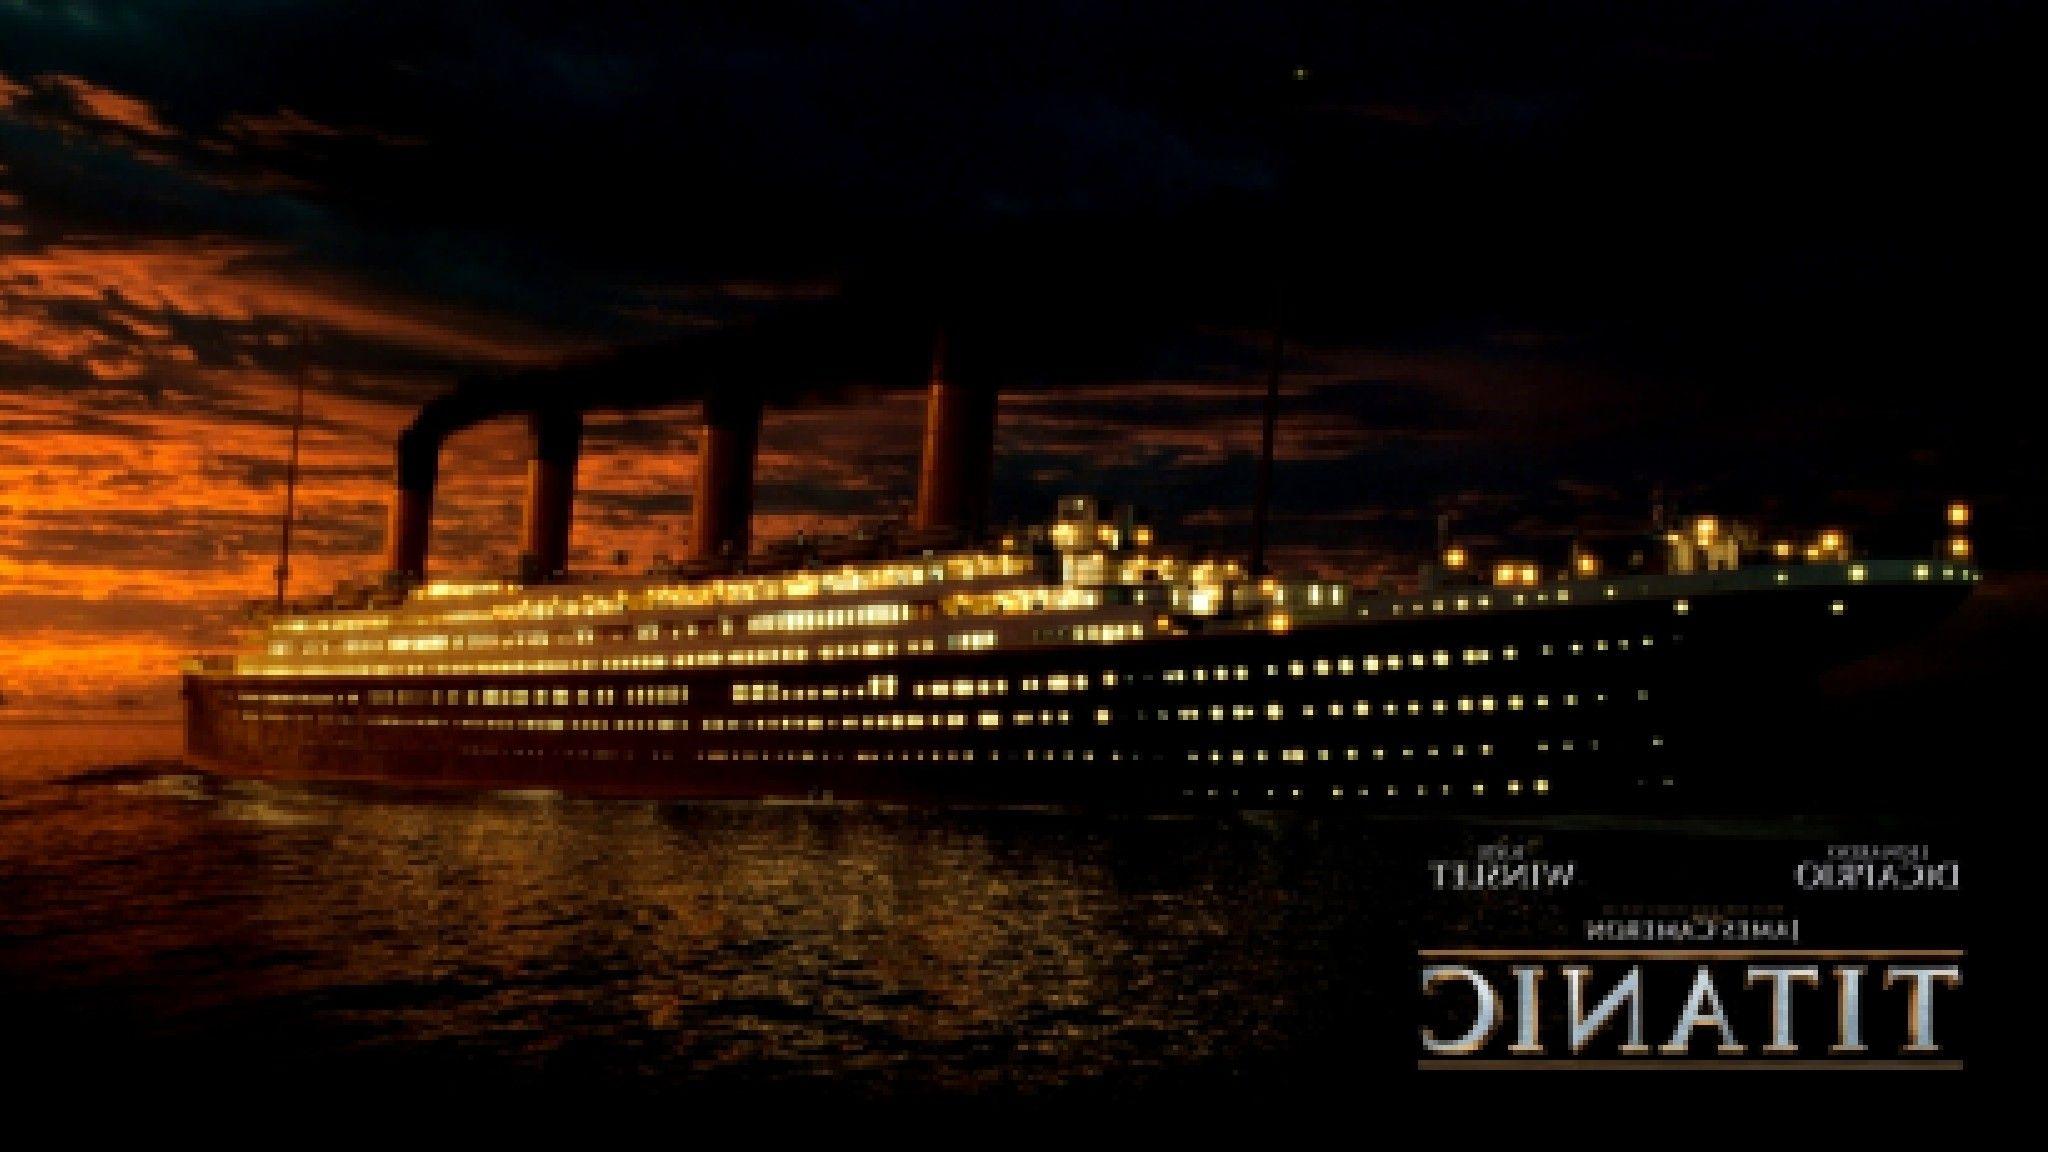 Wallpaper of Titanic Ship